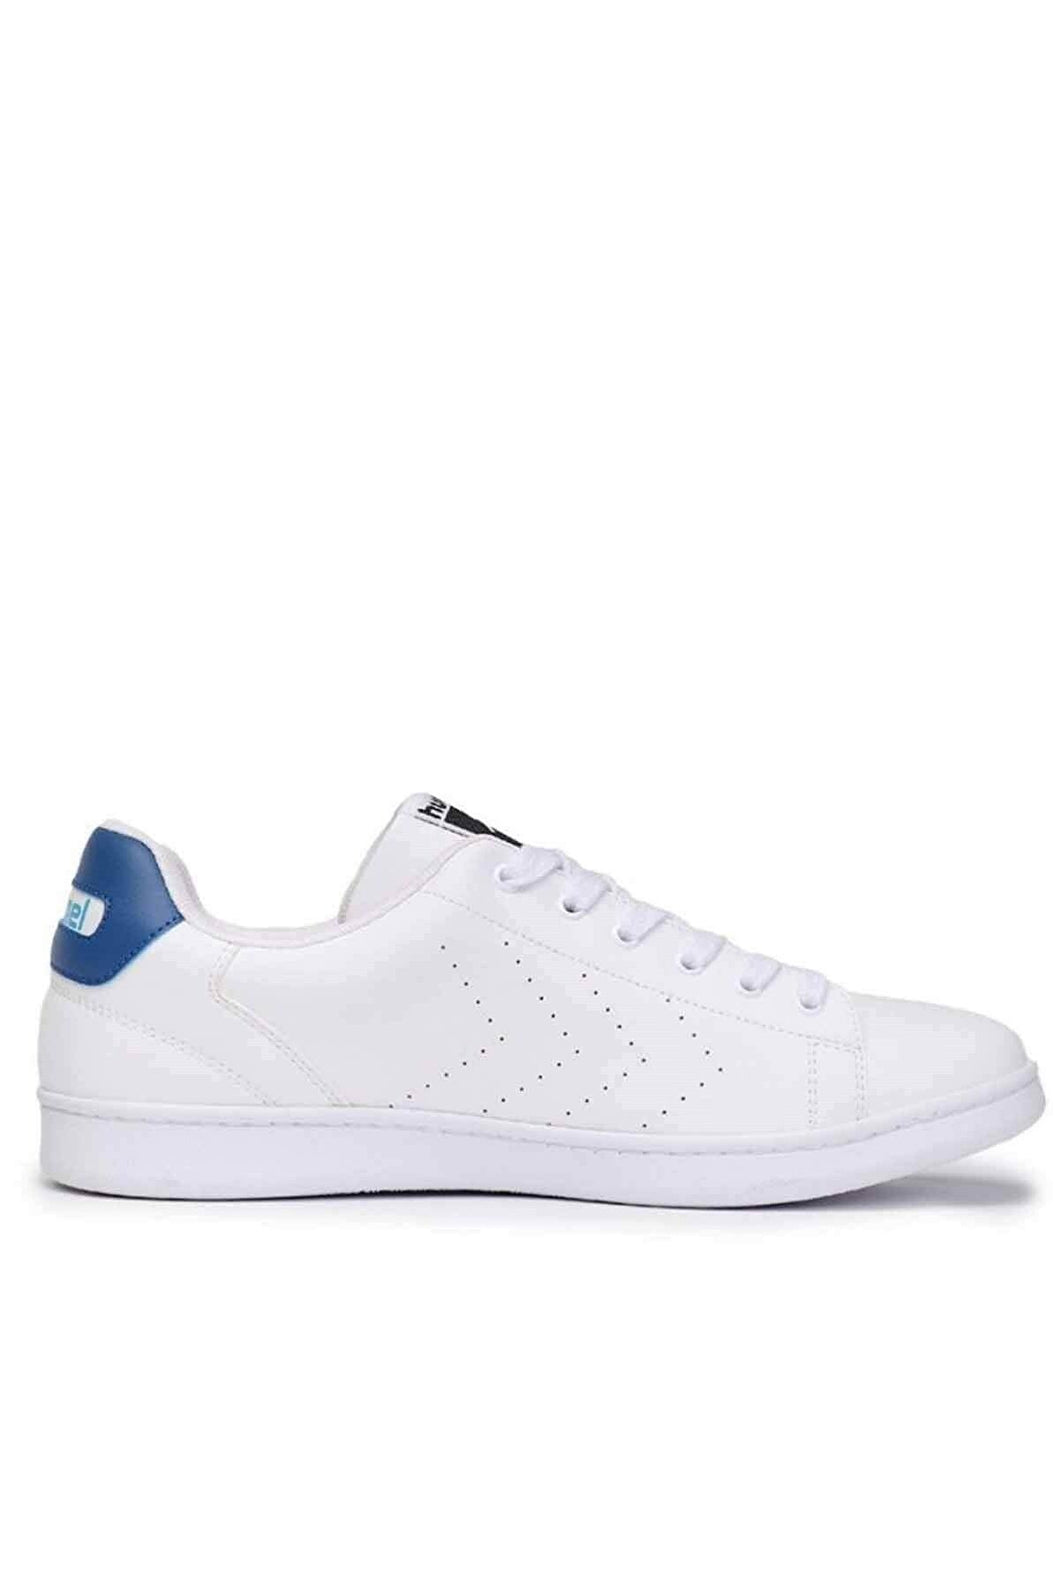 Hummel White Sneakers